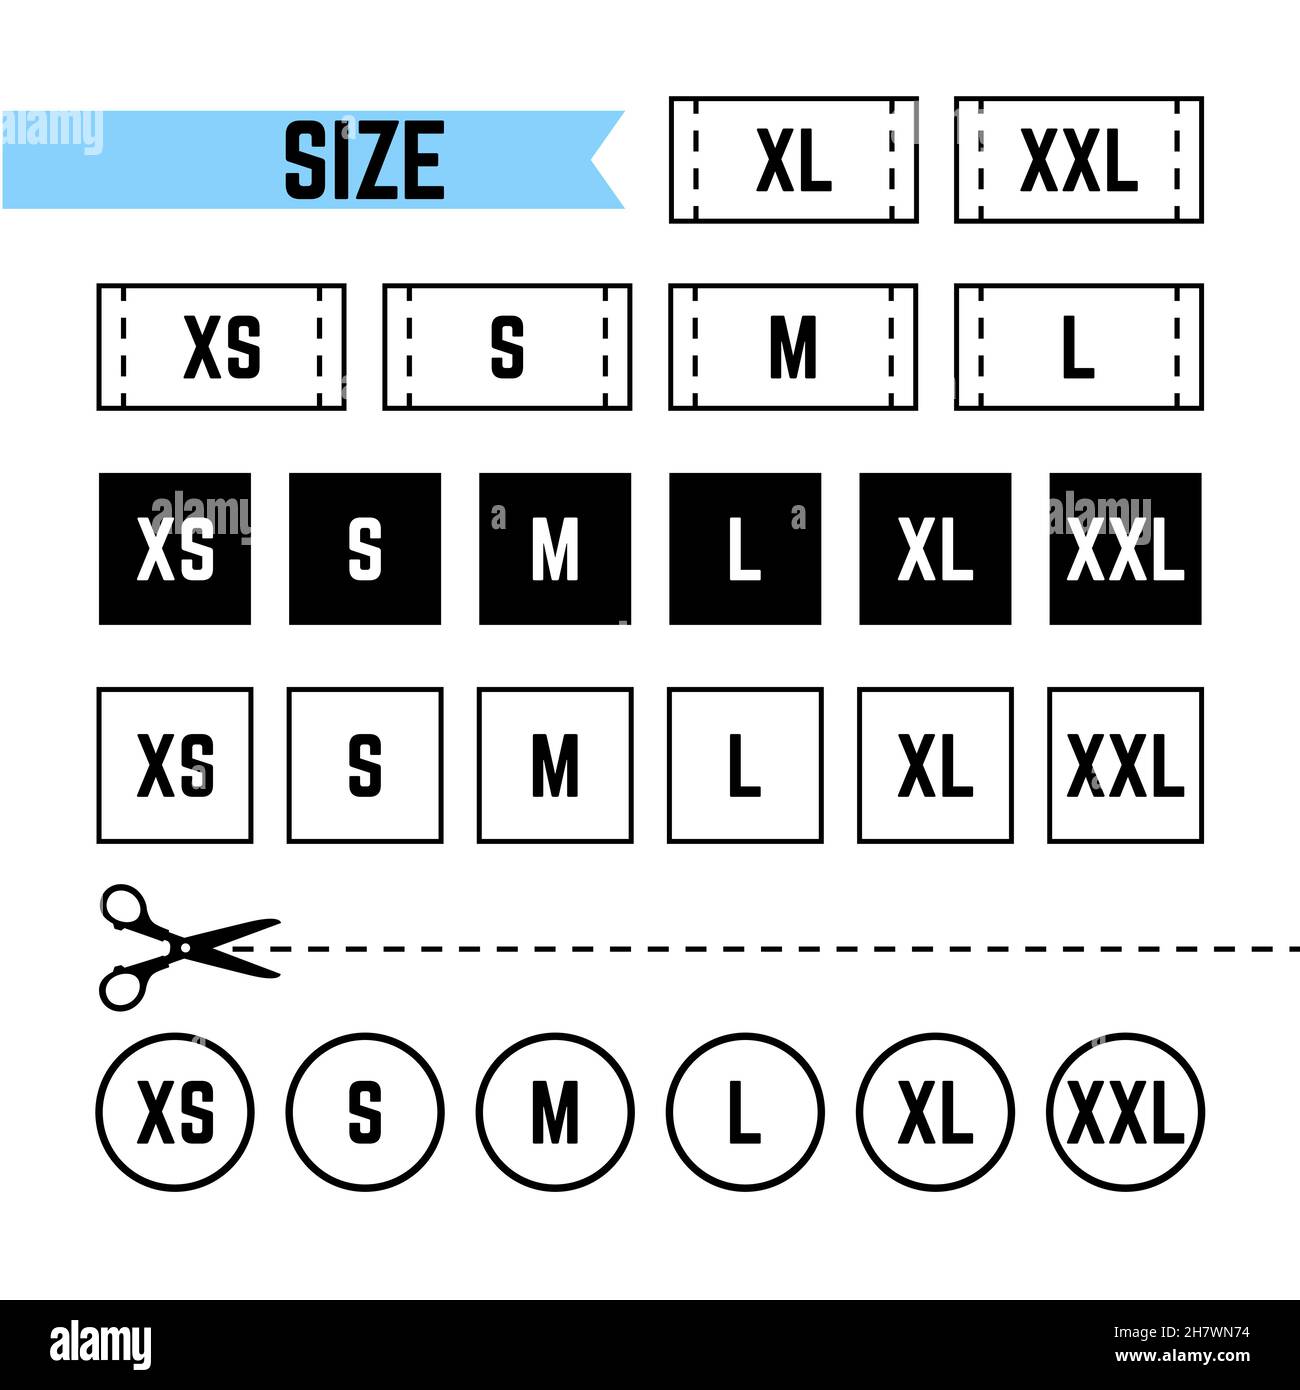 Etiquetas de tallas de ropa. SÍMBOLOS S, M, L, XL, XXL Imagen Vector de  stock - Alamy